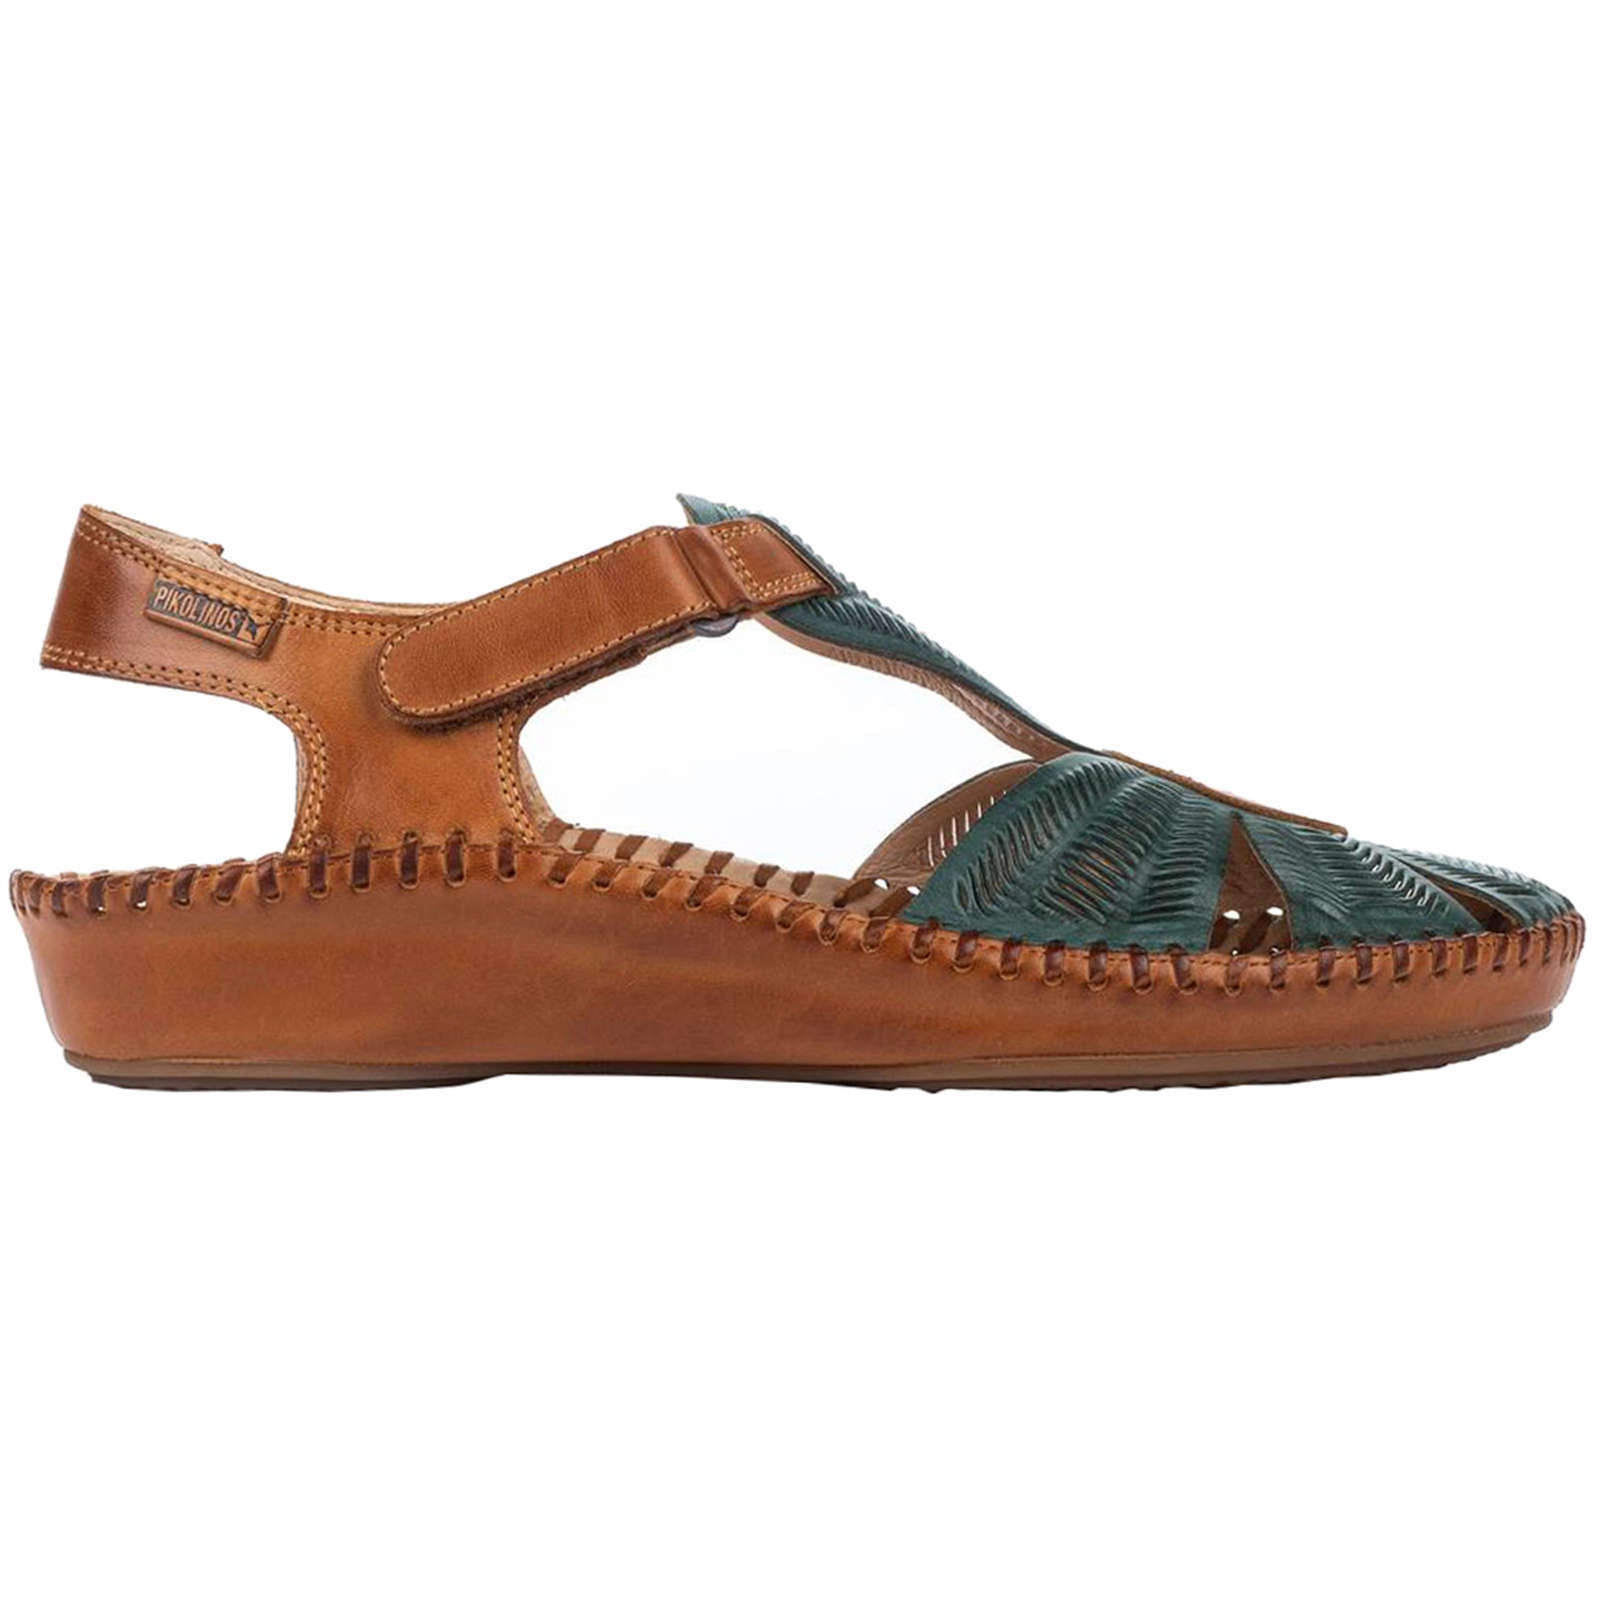 Pikolinos Puerto Vallarta 655-0575 Leather Womens Sandals#color_emerald